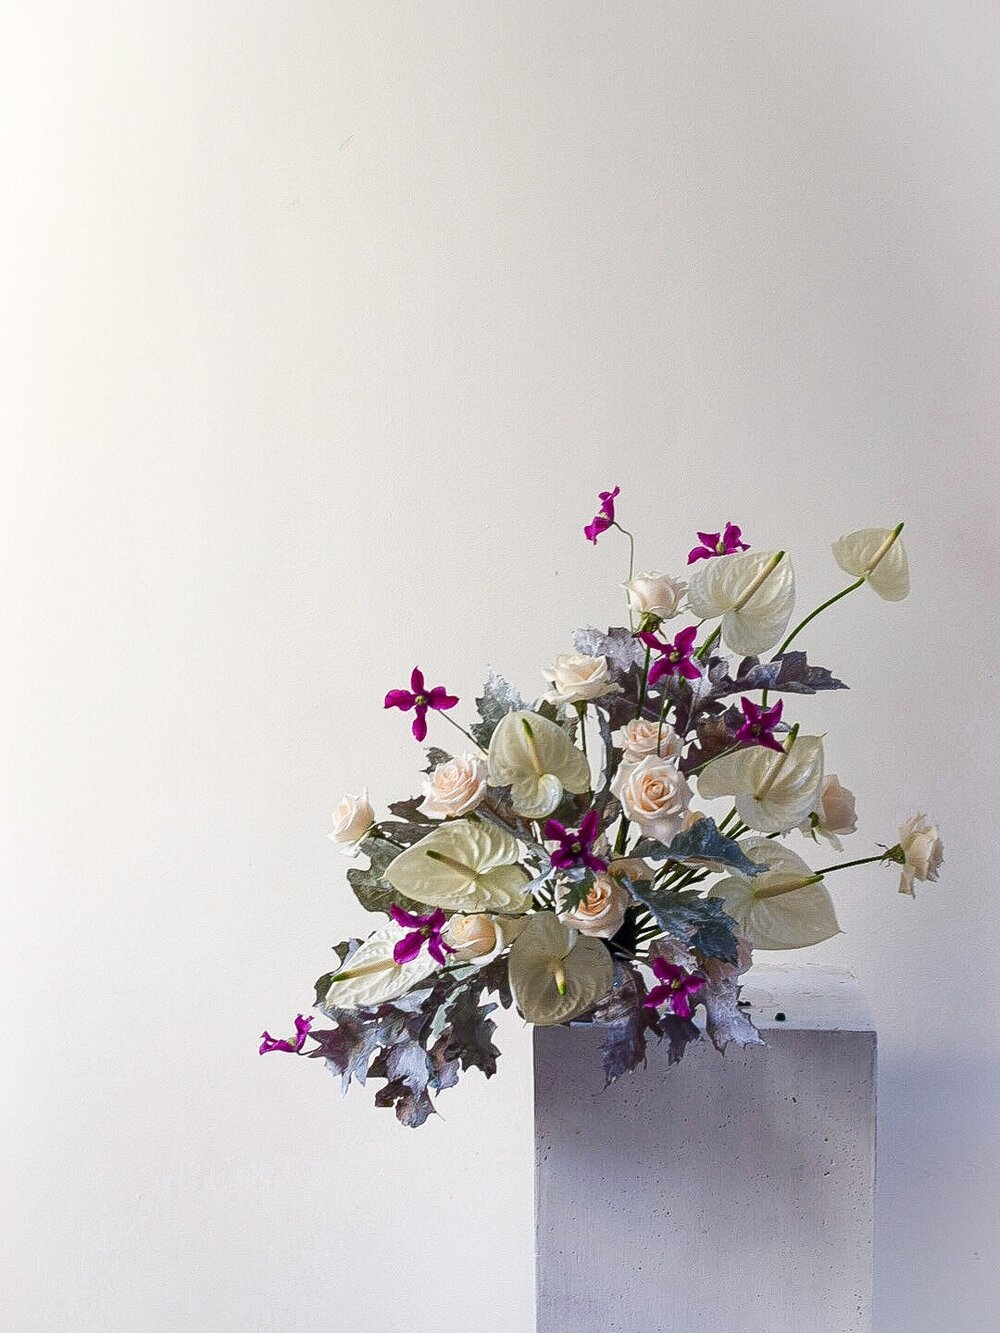 Contemporary Arrangement by AC Floral Studio's Alexander Campbell - on Thursd